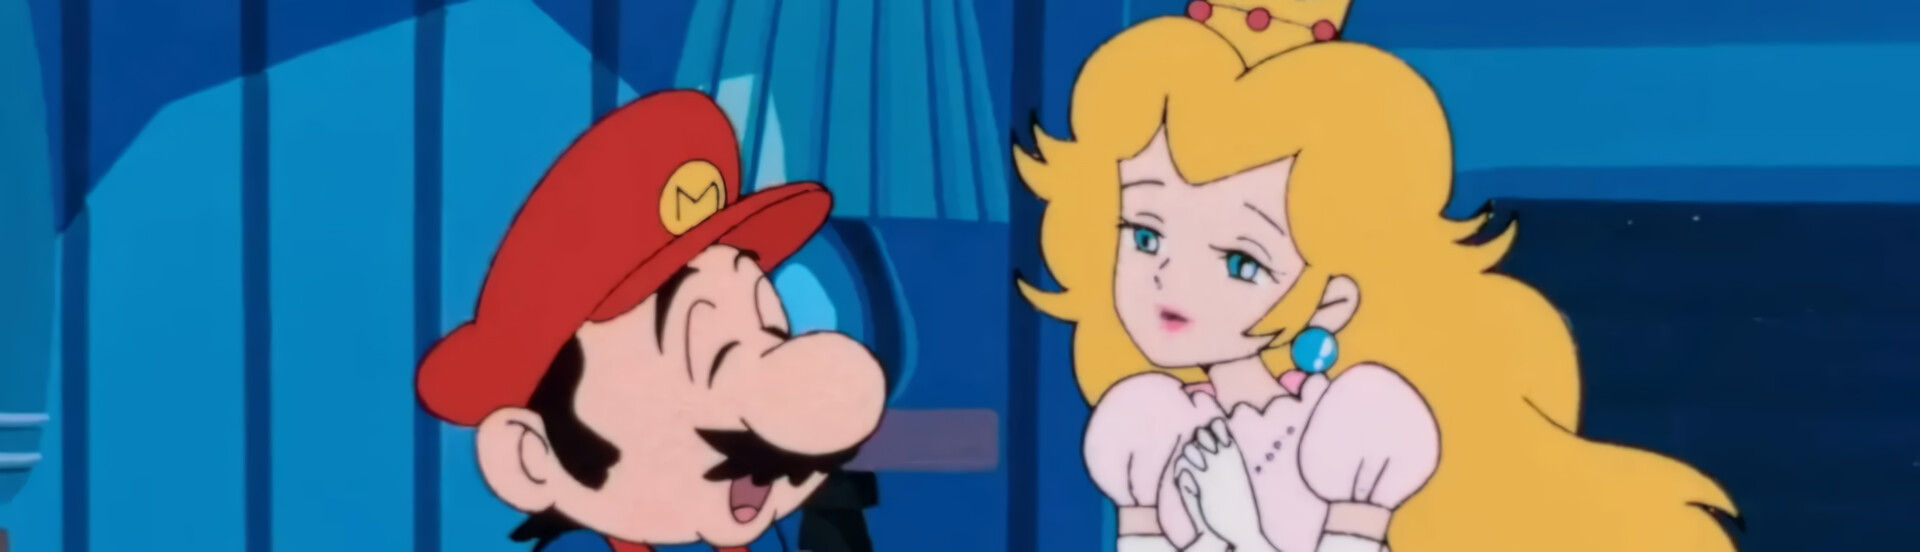 Els al·lucinants germans Mario i el rocambolesc rescat de la princesa Peach!